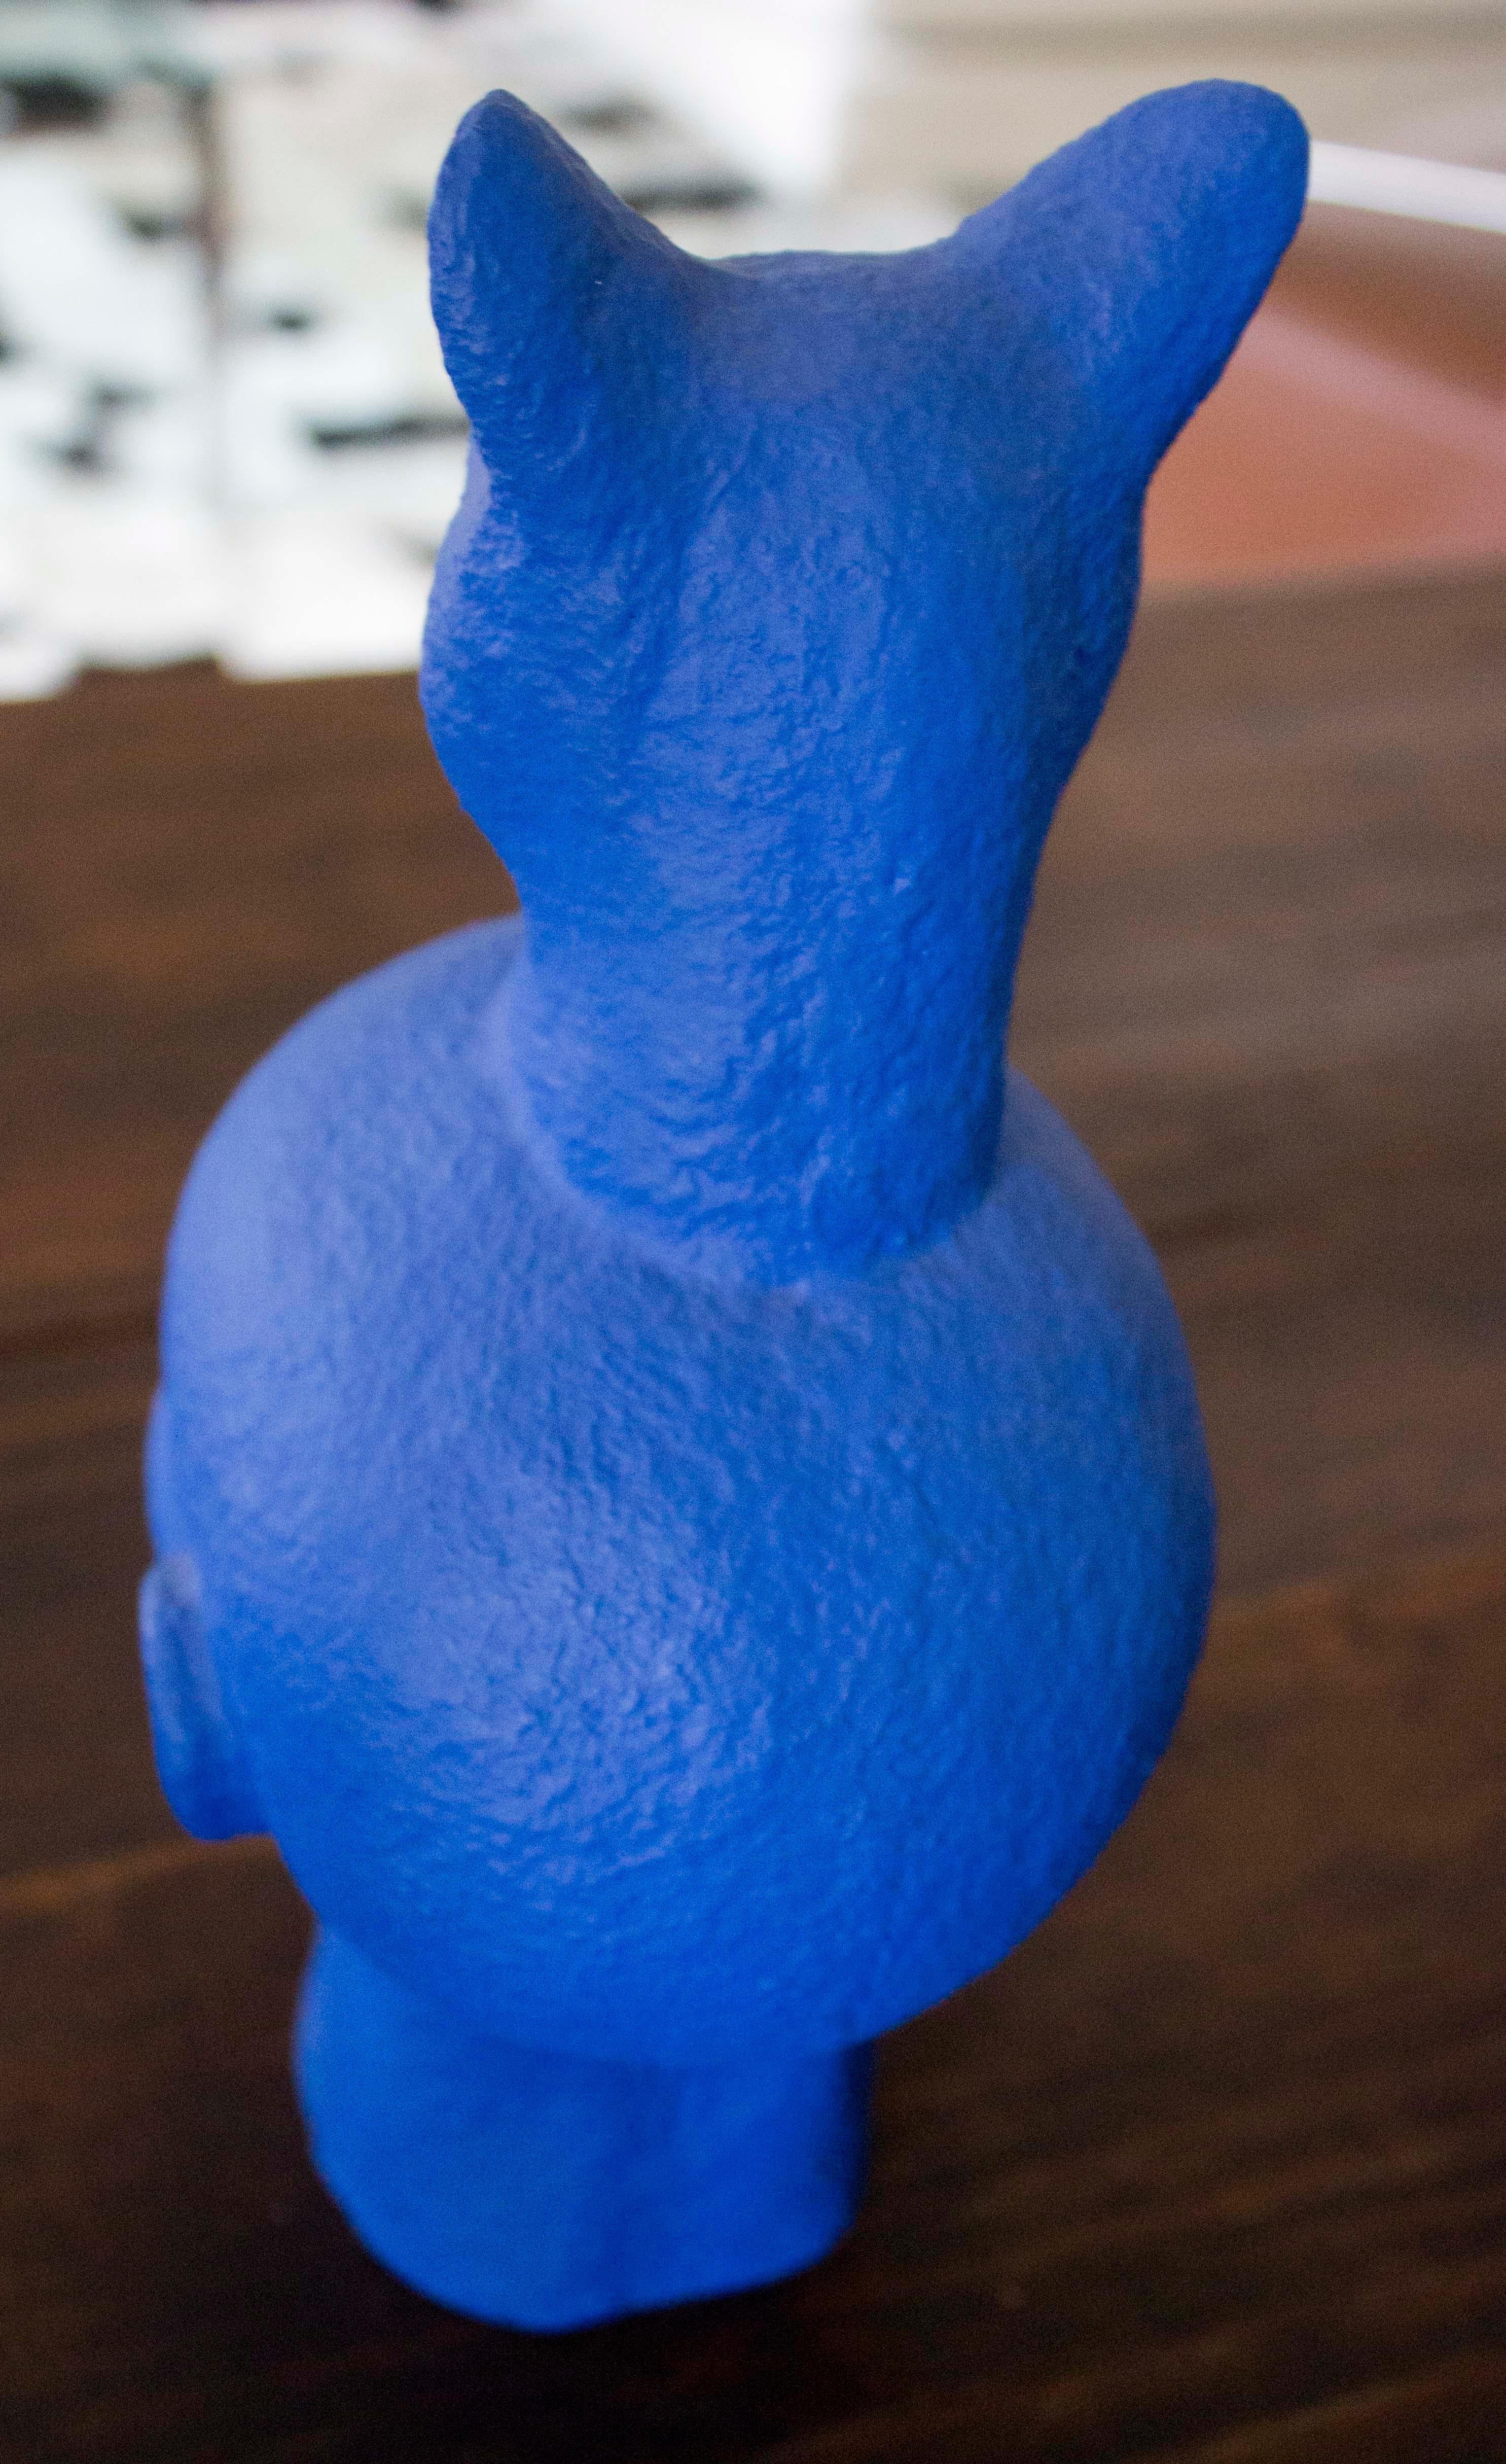 xtasis - Or Figurative Sculpture par Nadín Ospina